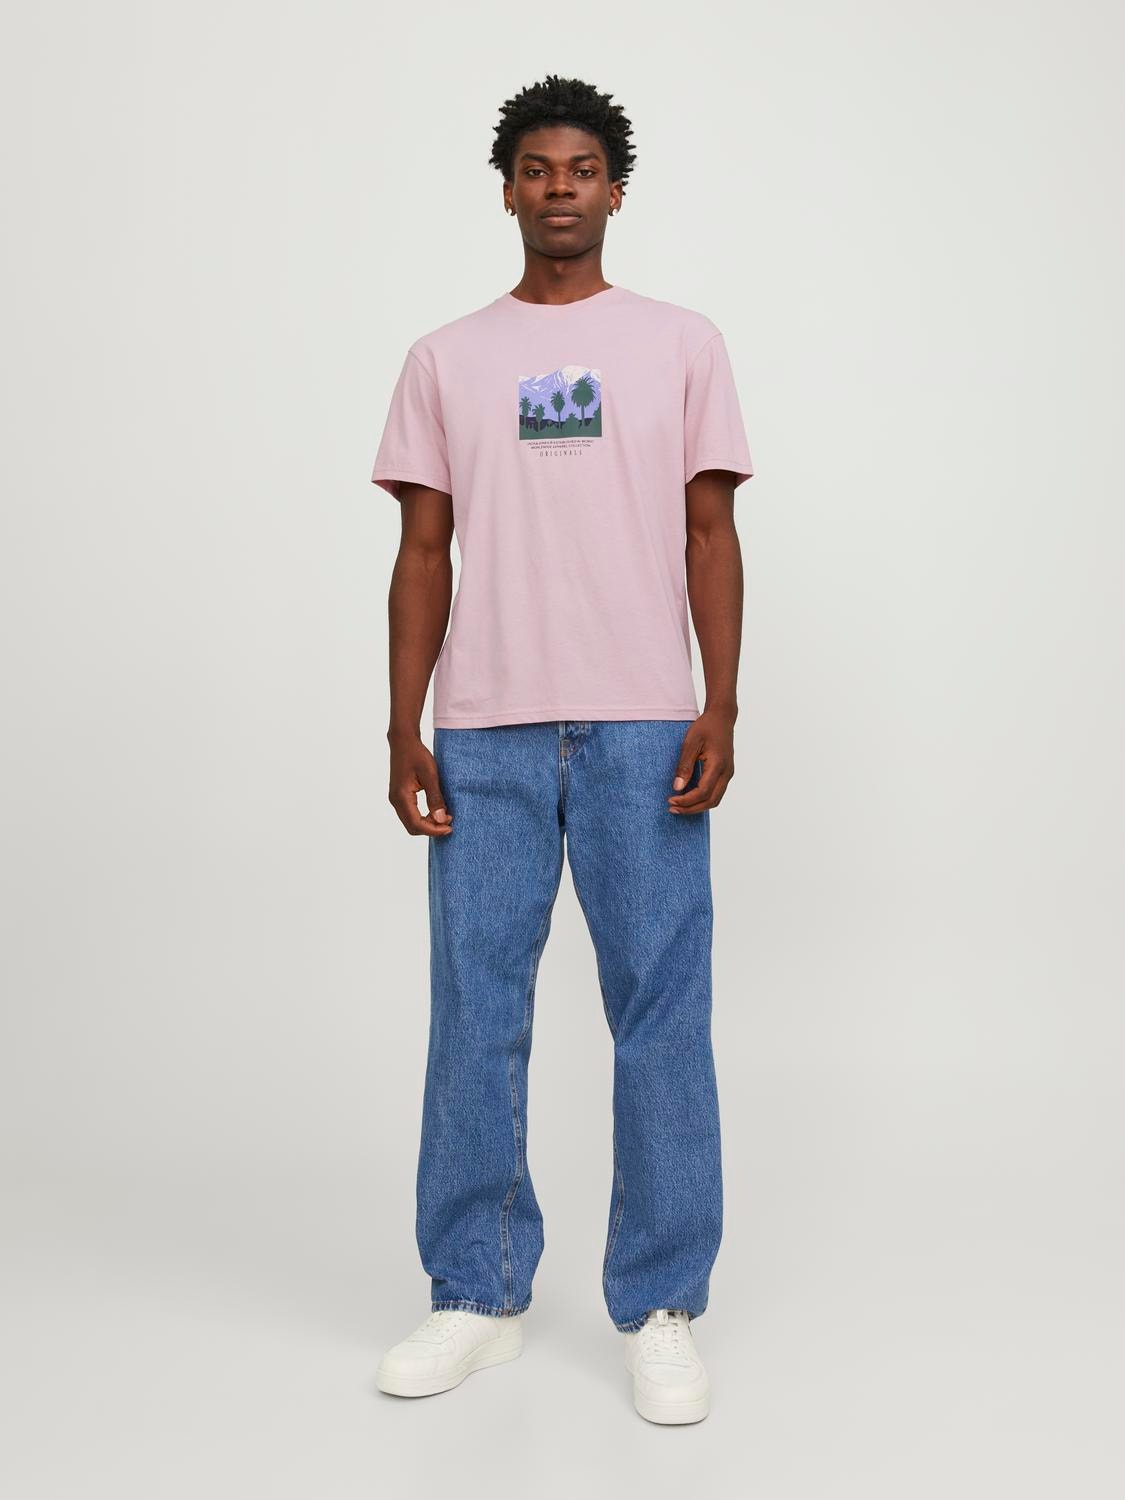 Jack & Jones Tryck Rundringning T-shirt -Pink Nectar - 12253613